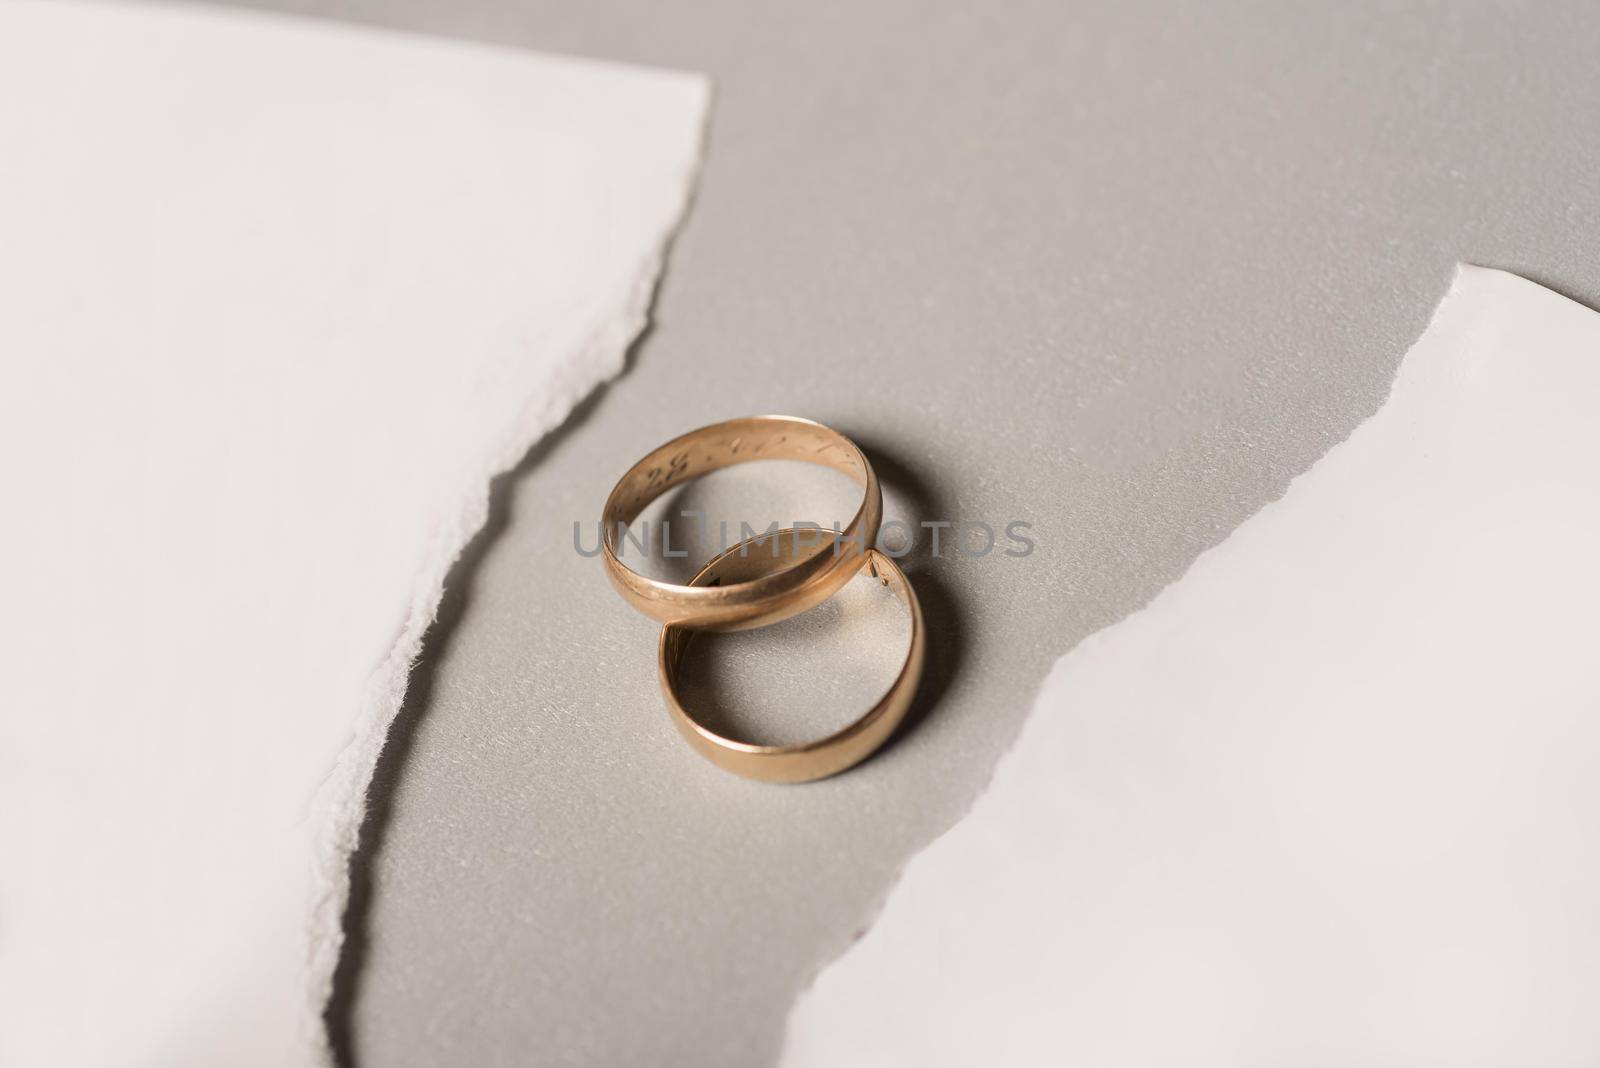 broken paper with golden wedding rings by Zahard